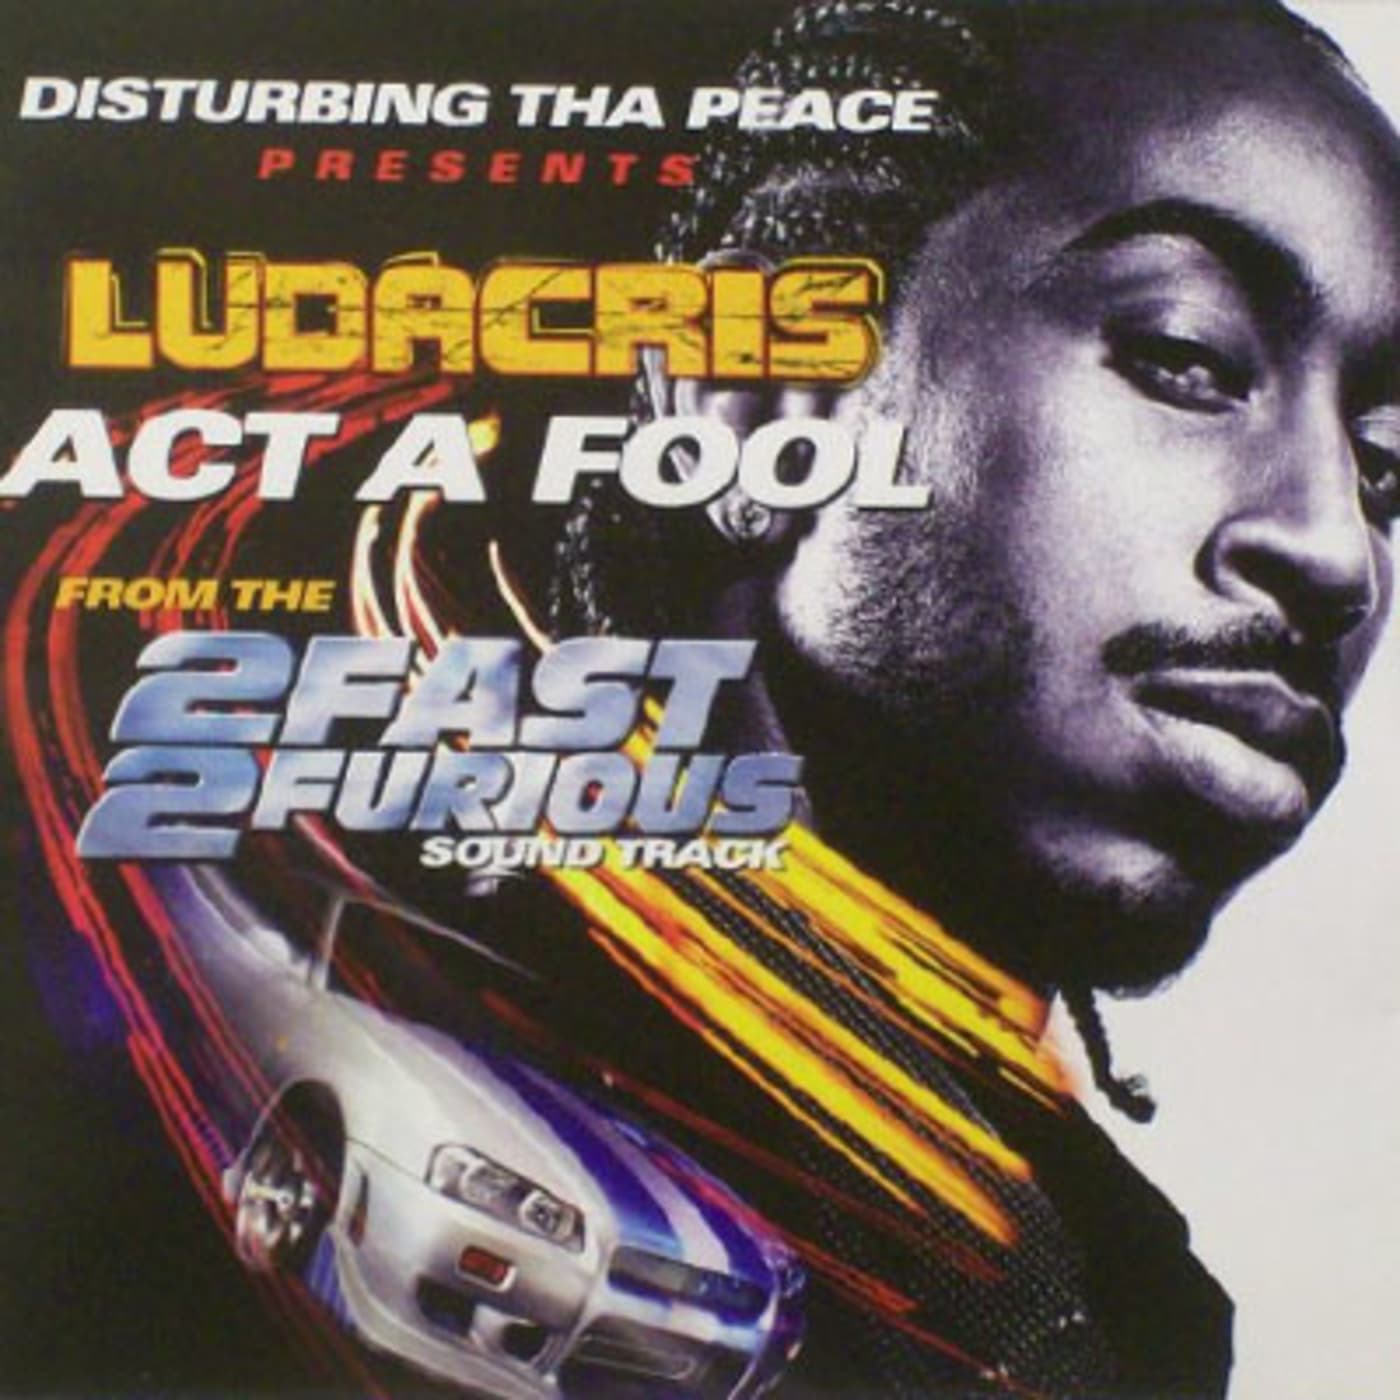 Act fool перевод. Лудакрис Форсаж 2. Ludacris Act a Fool. Ludacris двойной Форсаж. Ludacris Act a Fool обложка.